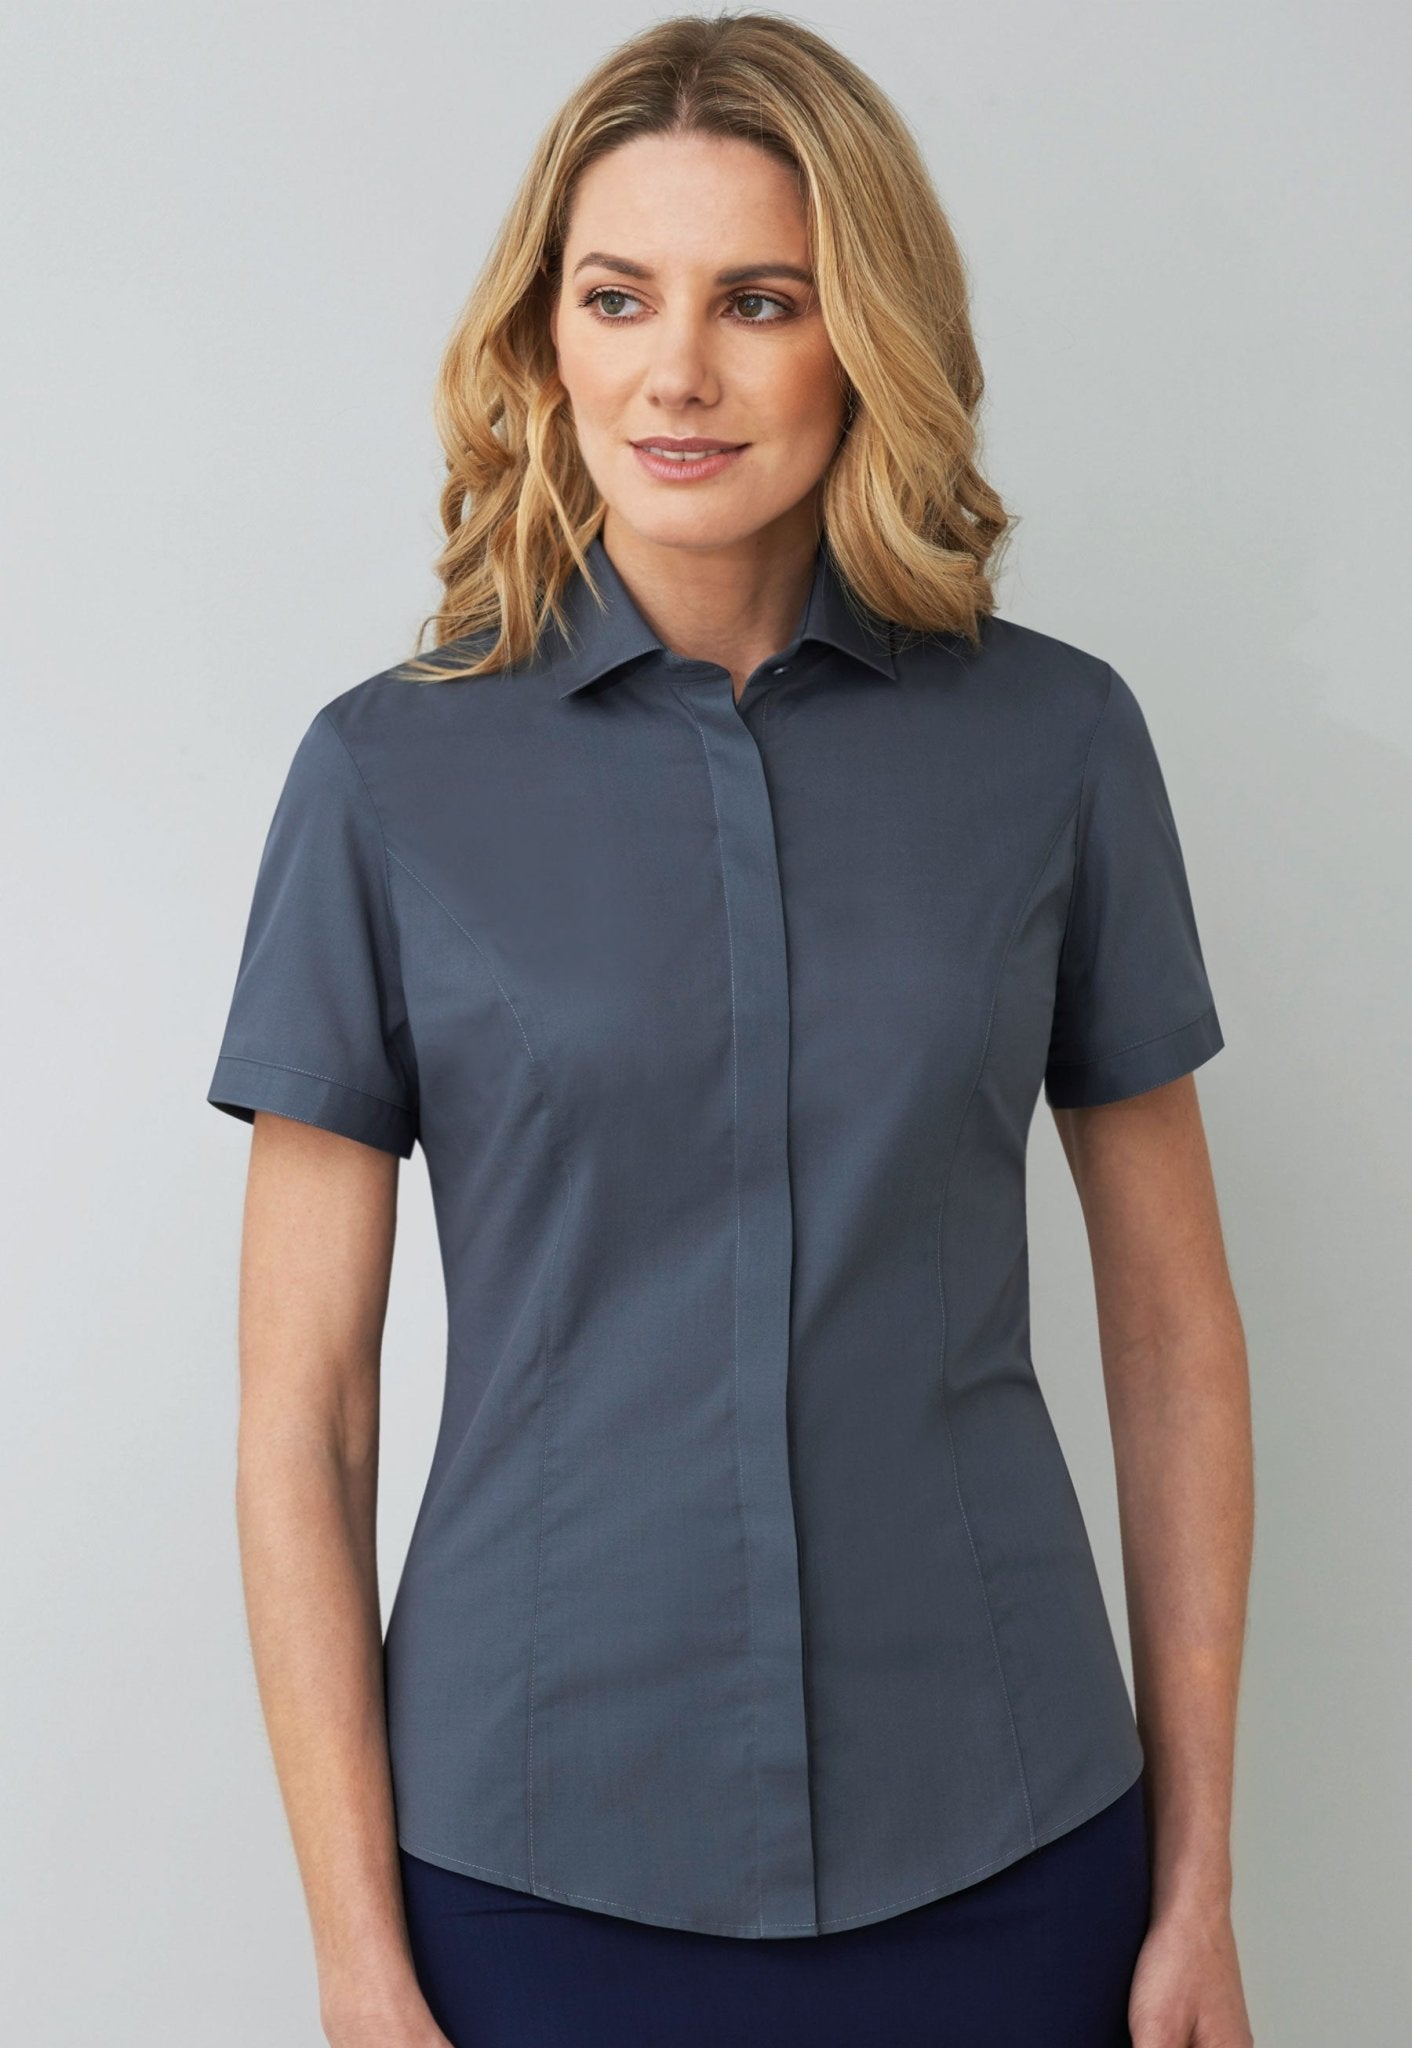 Brook Taverner Modena Shirt - Women's Shirt - The Work Uniform Company